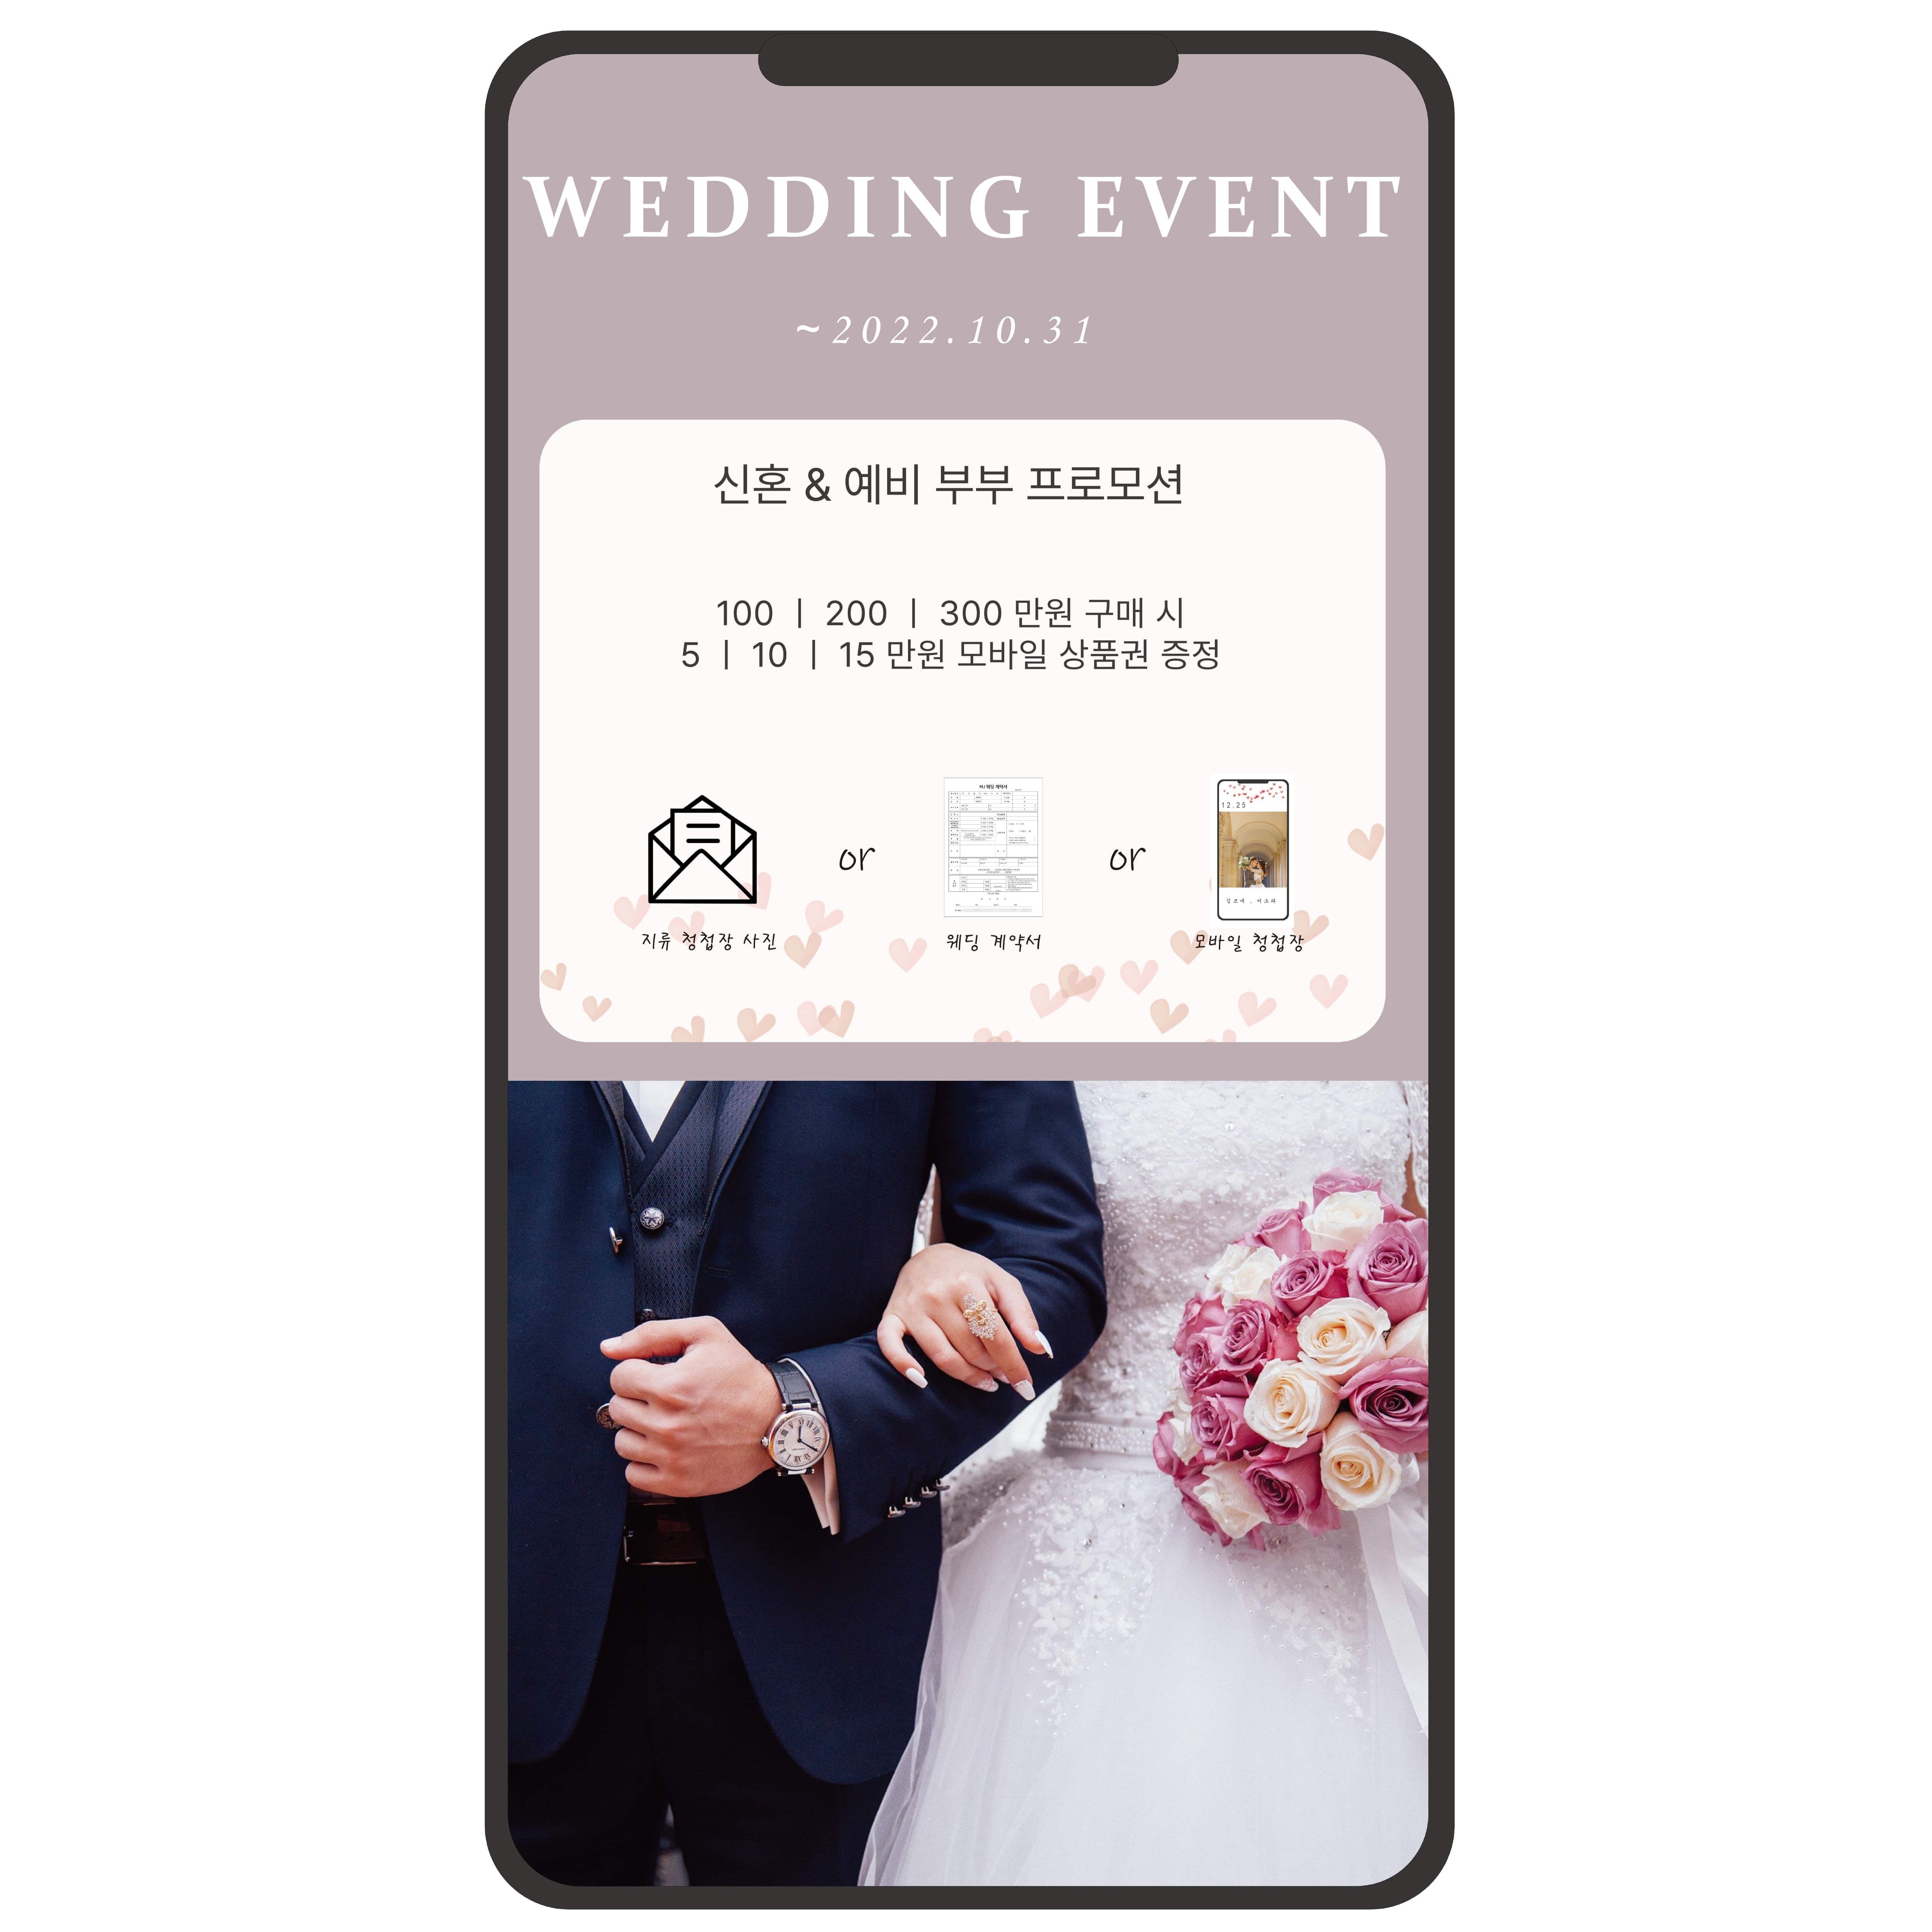 WEDDING EVENT